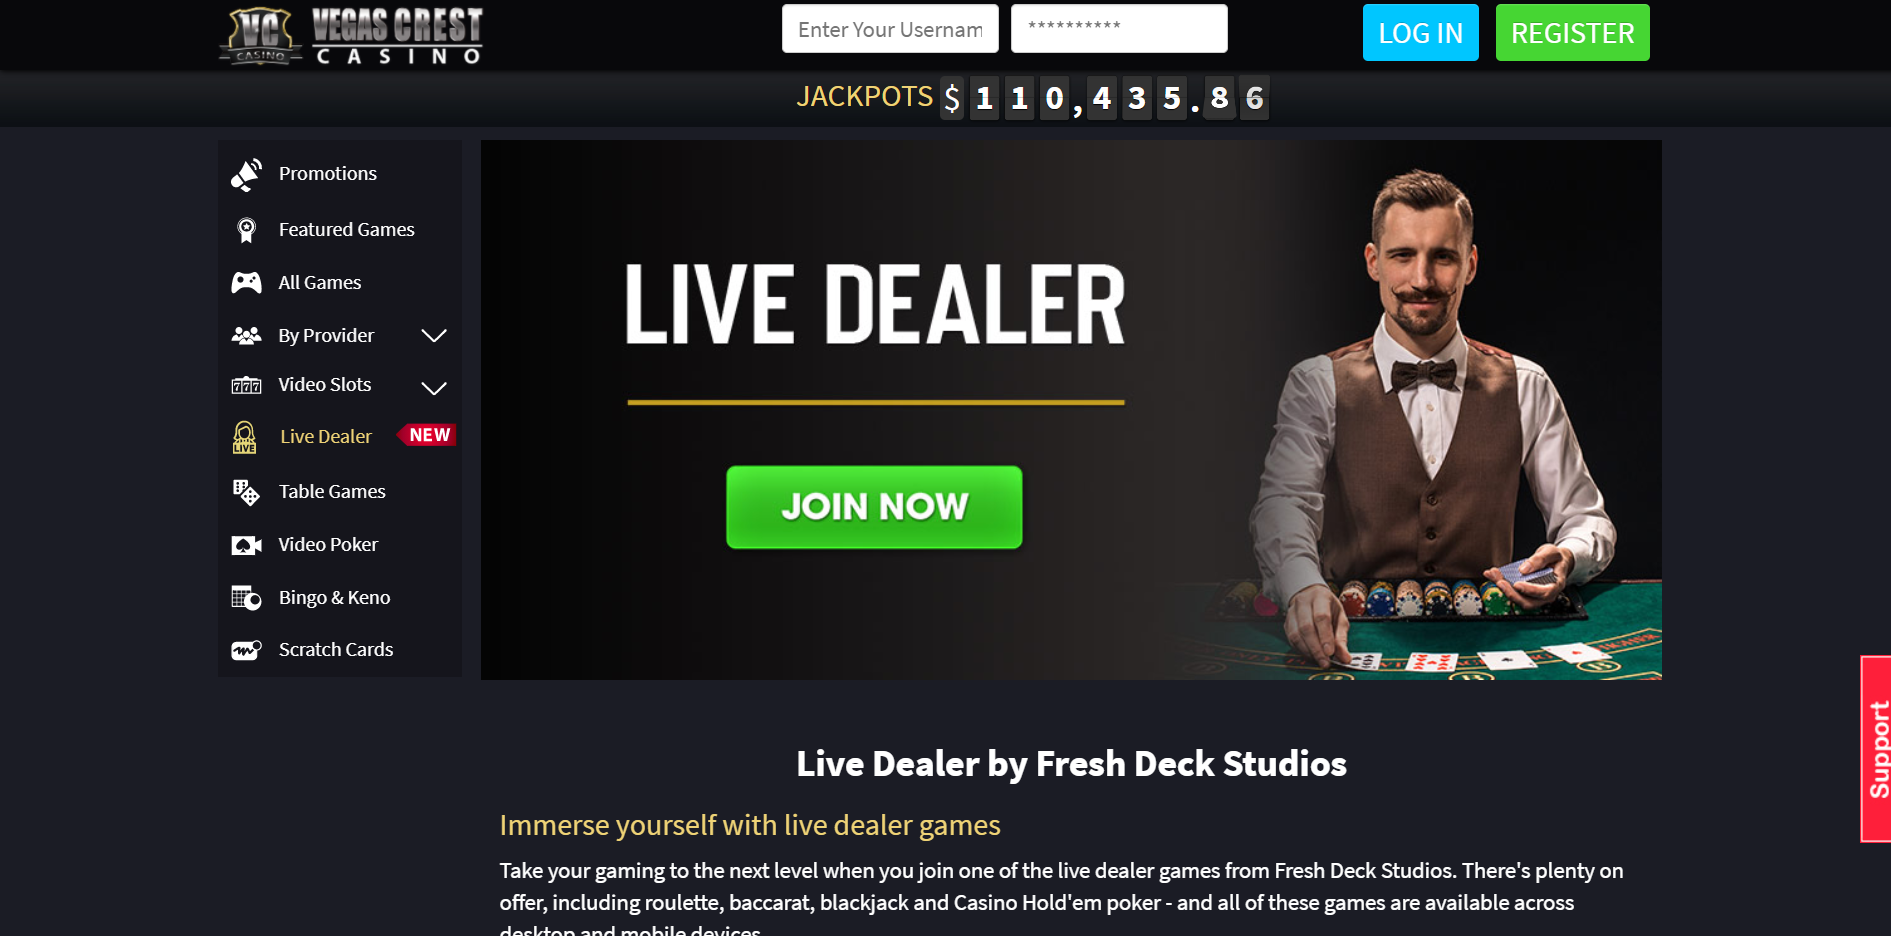 Vegas Crest Casino Live Dealer Games